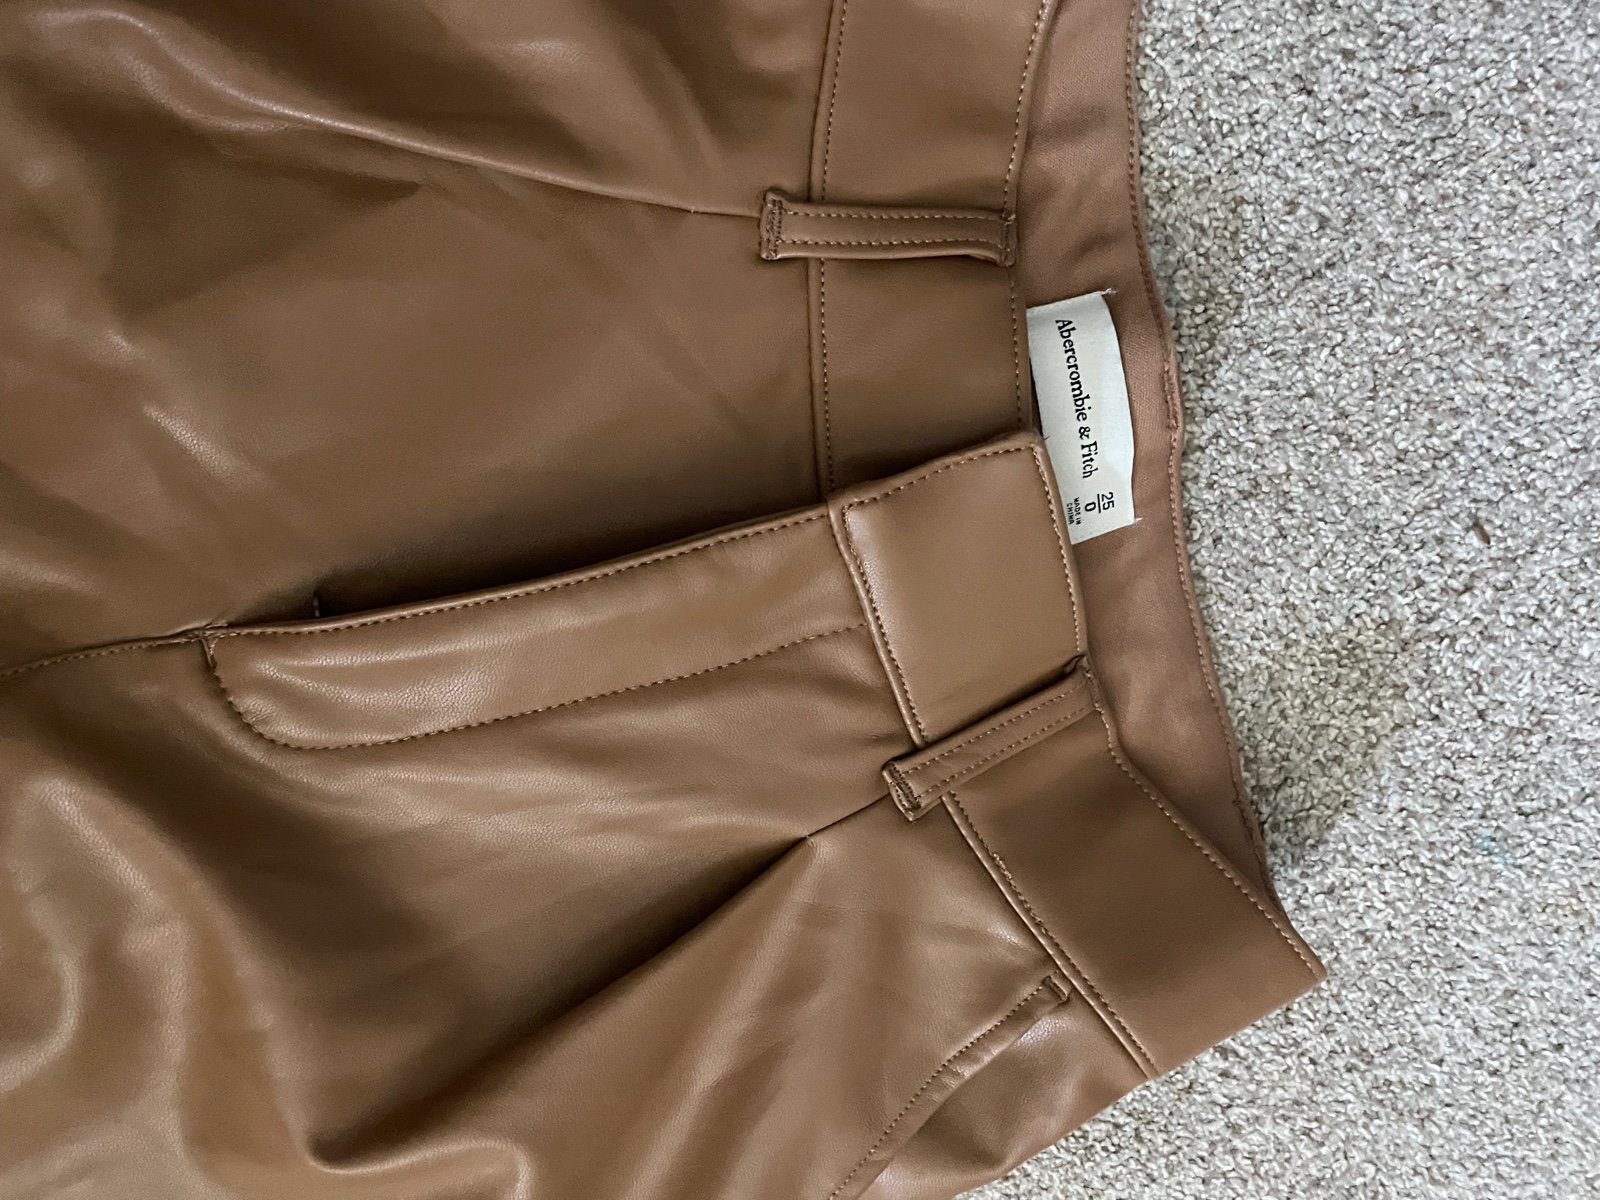 reasonable price Abercrombie leather pants gtGClgaj9 Factory Price